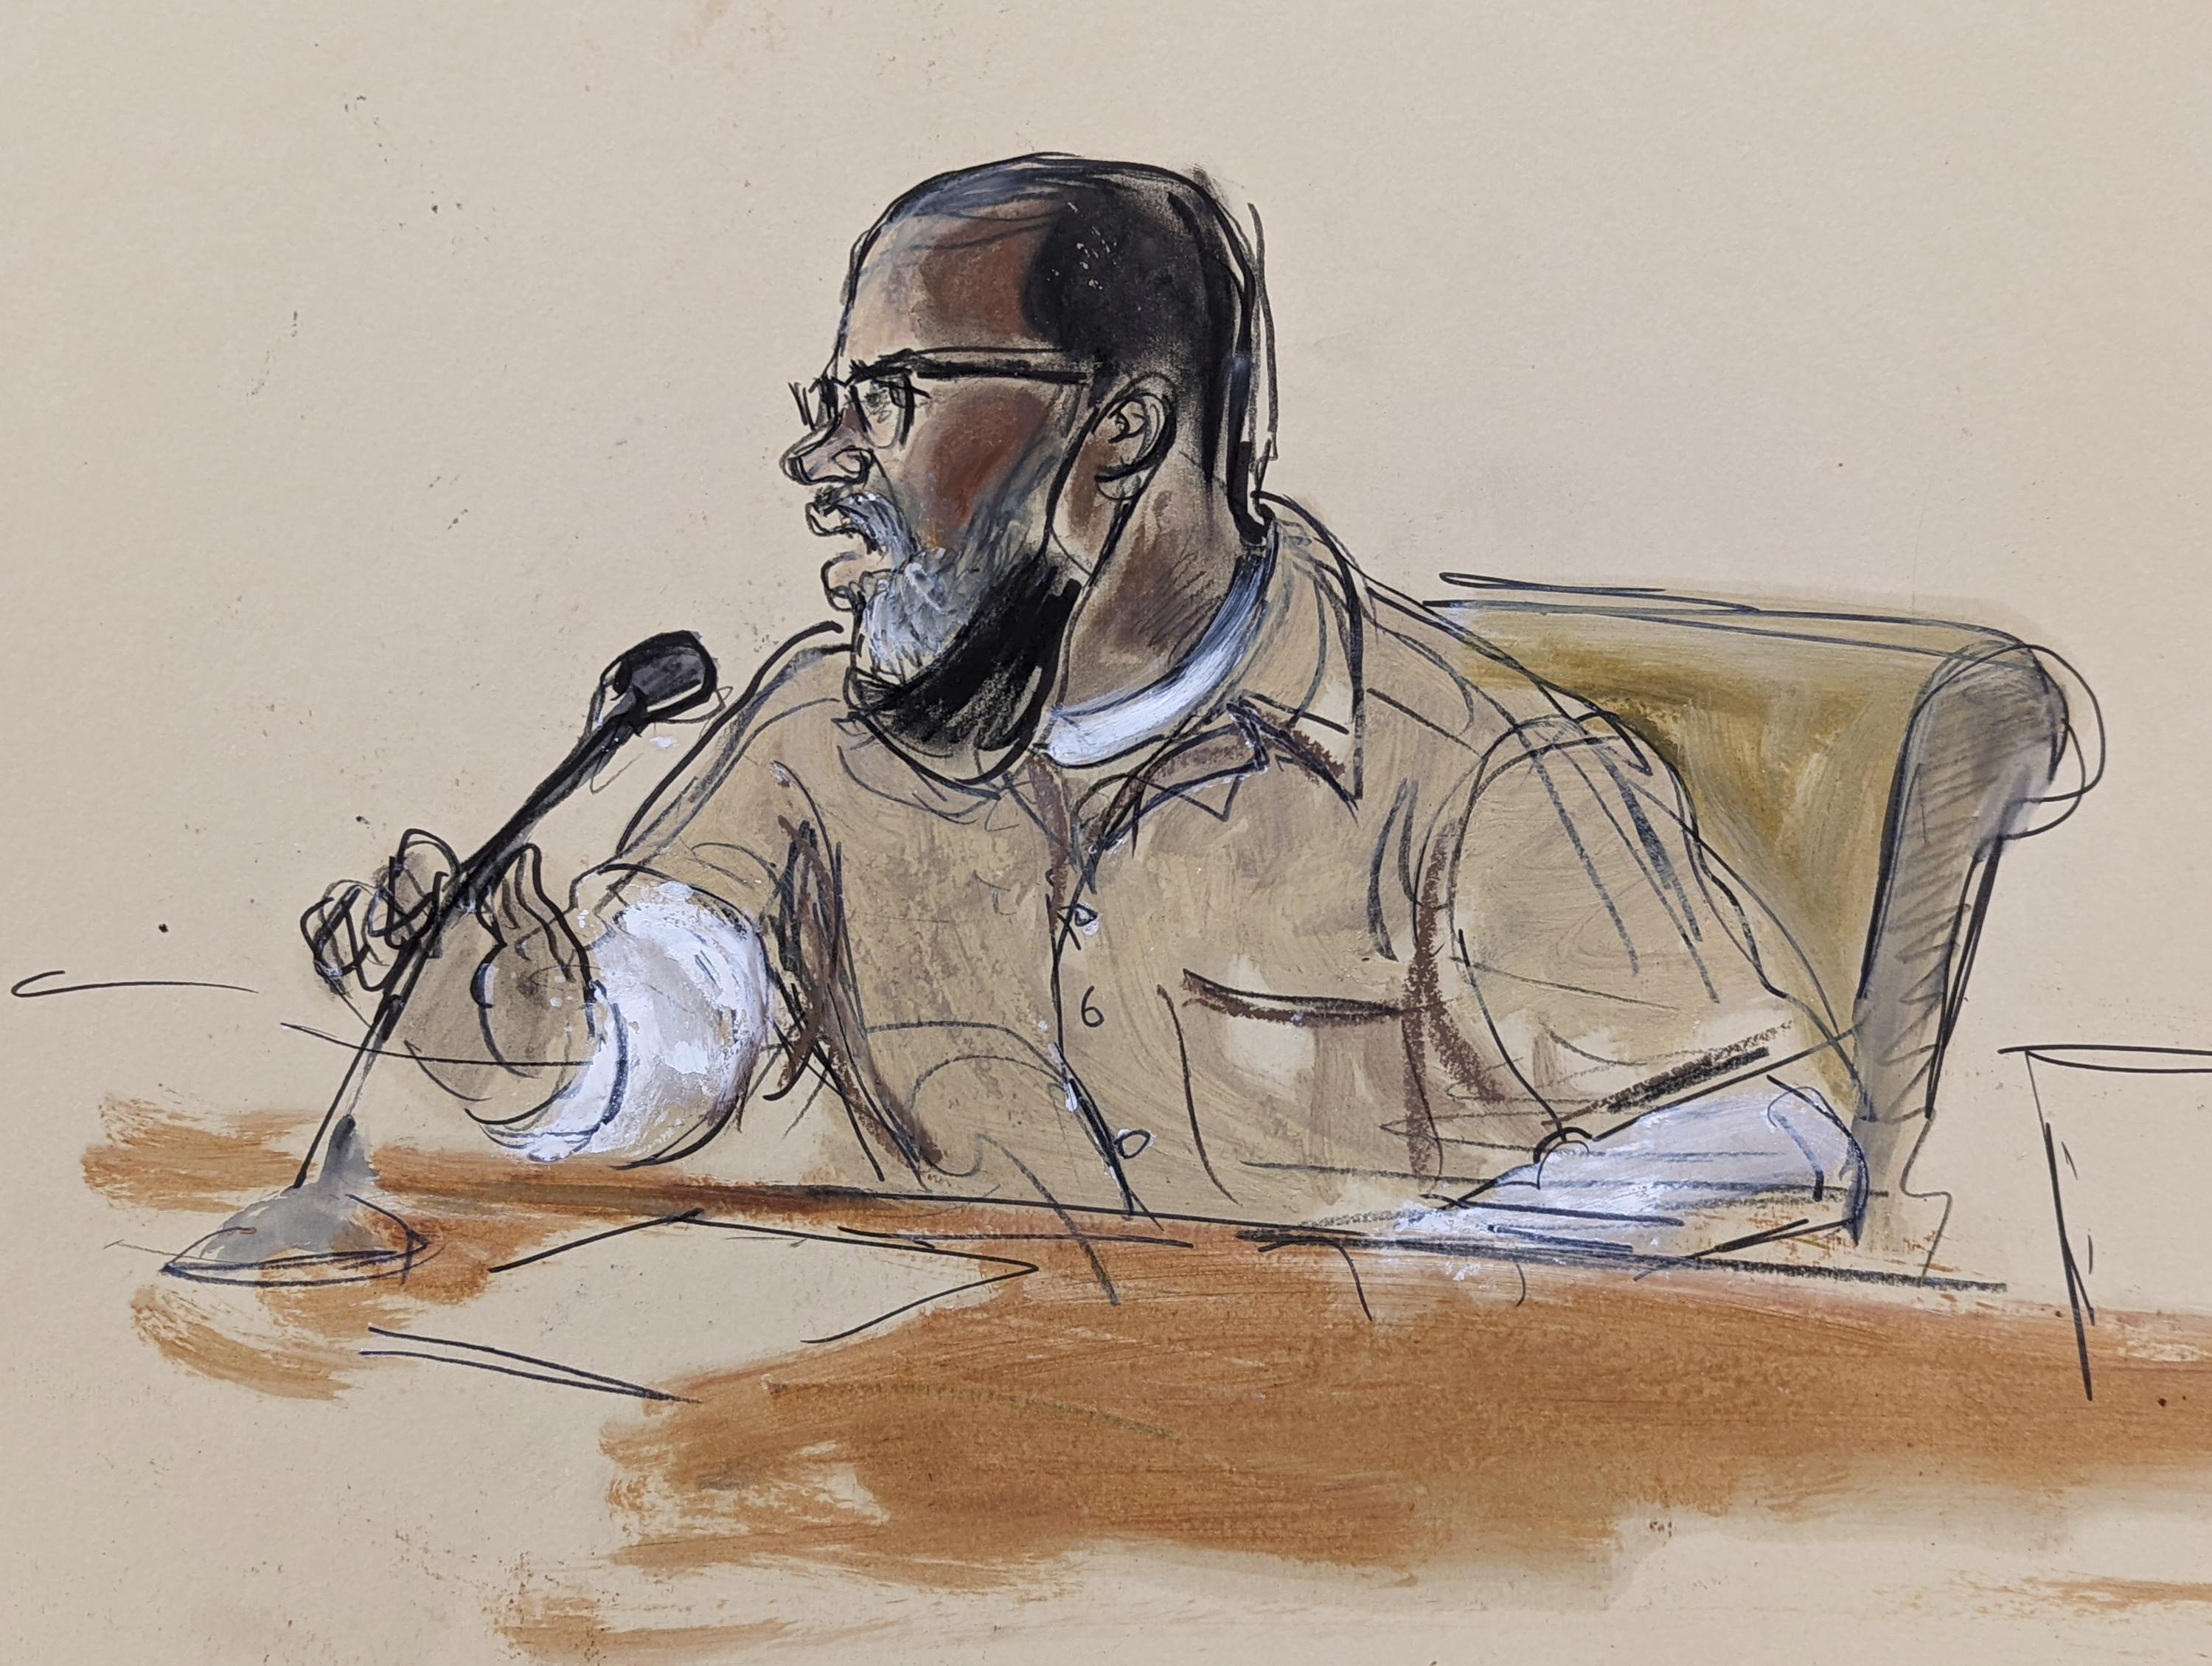 R. Kelly sentenced years in sex trafficking case | AP News